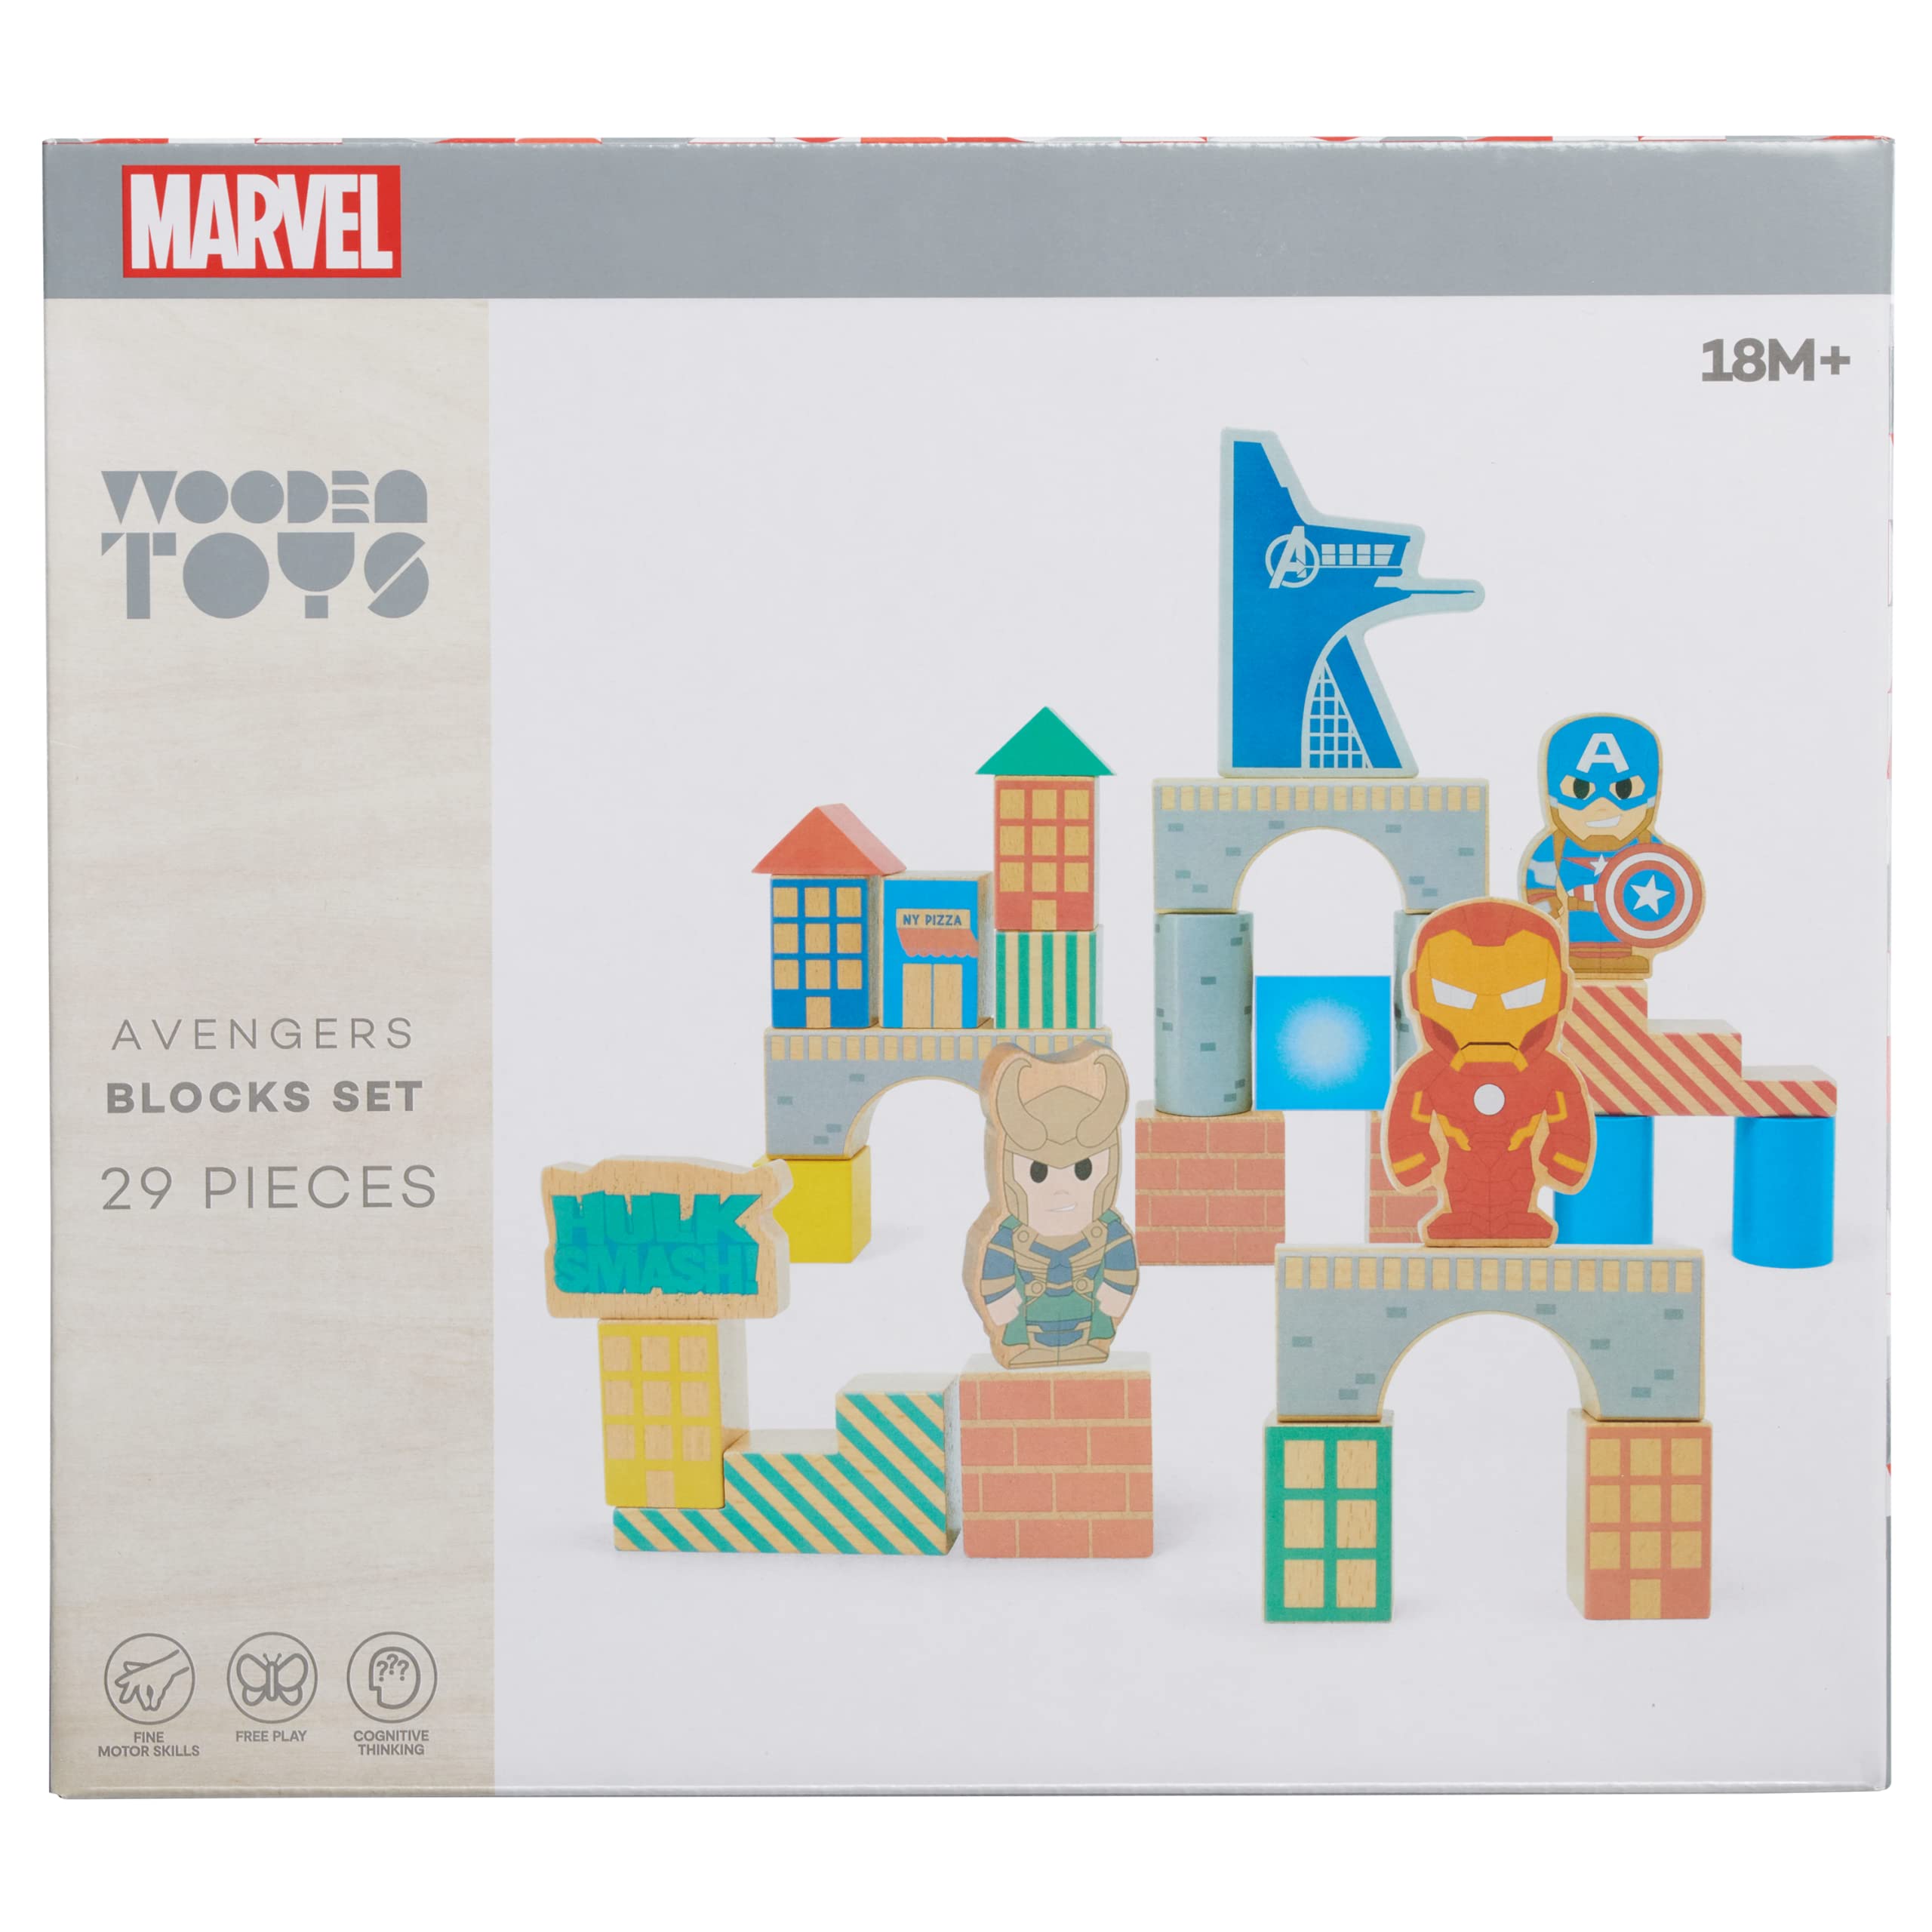 Disney Marvel Wooden, Avengers 29-Piece Block Set, Kids Toys for Ages 18 Month, Amazon Exclusive